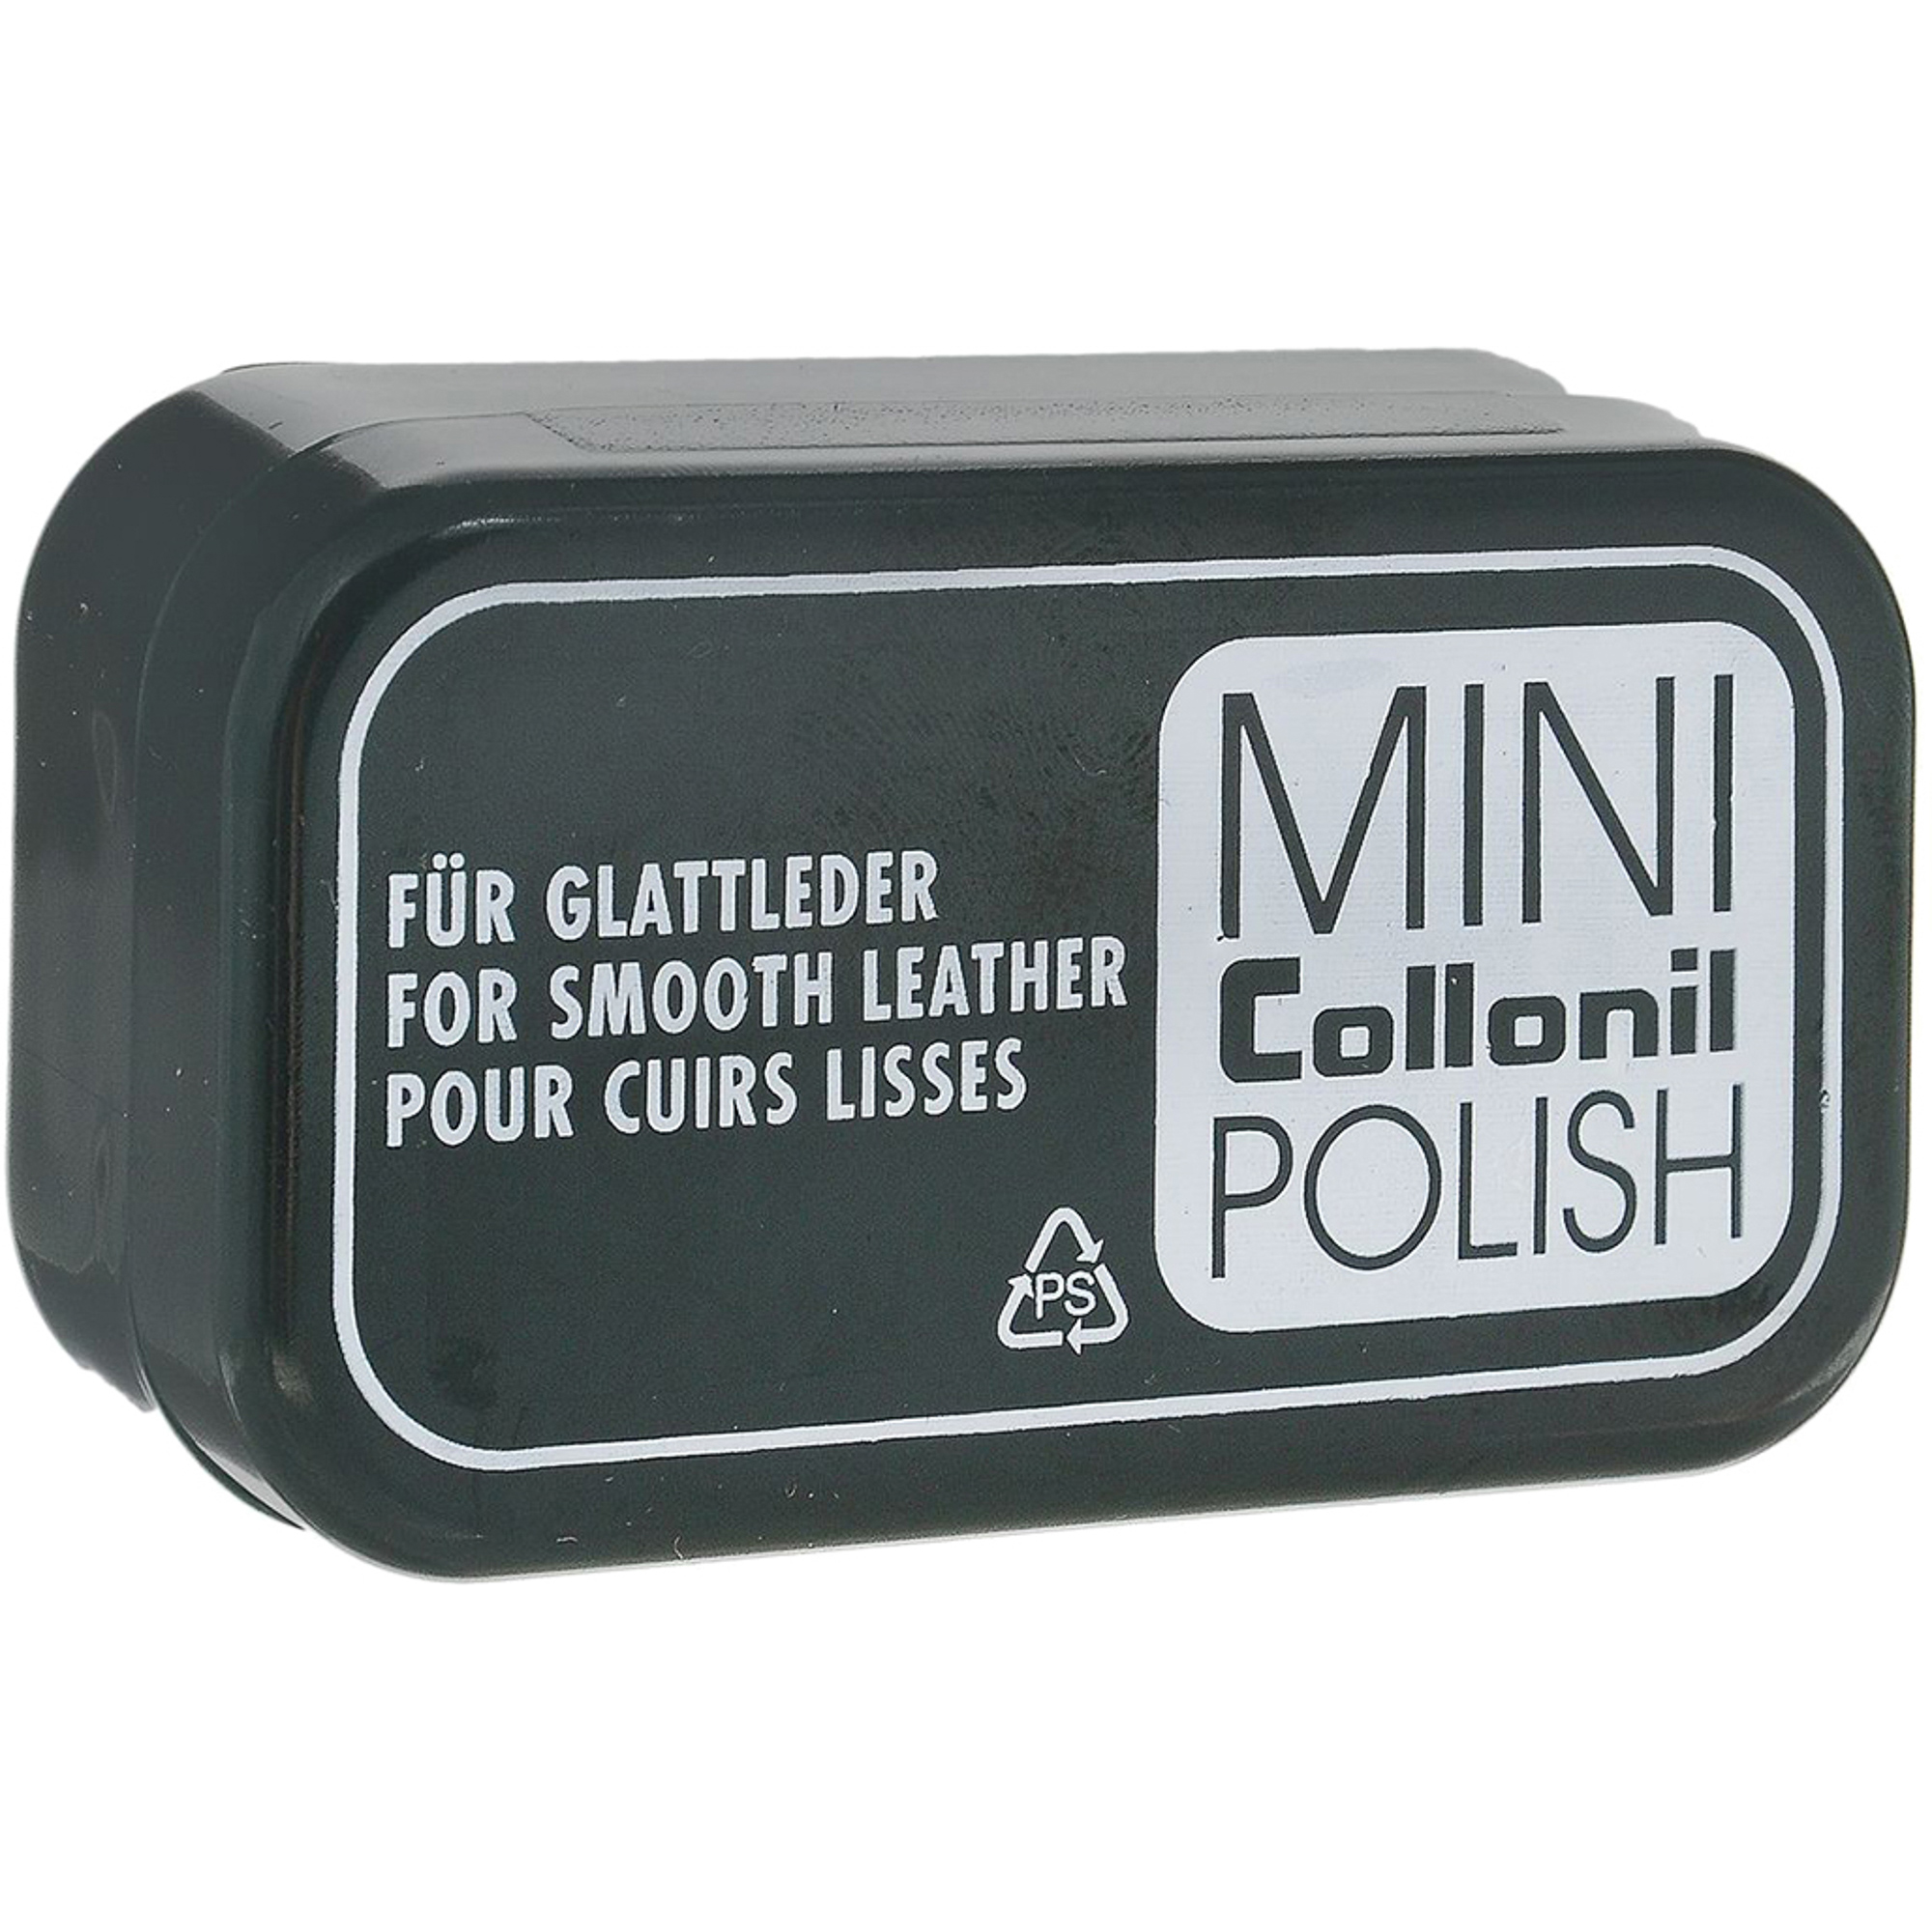 Губка для полировки Collonil Mini Polish губка sitil self shining для полировки обуви из гладкой кожи темно коричневый